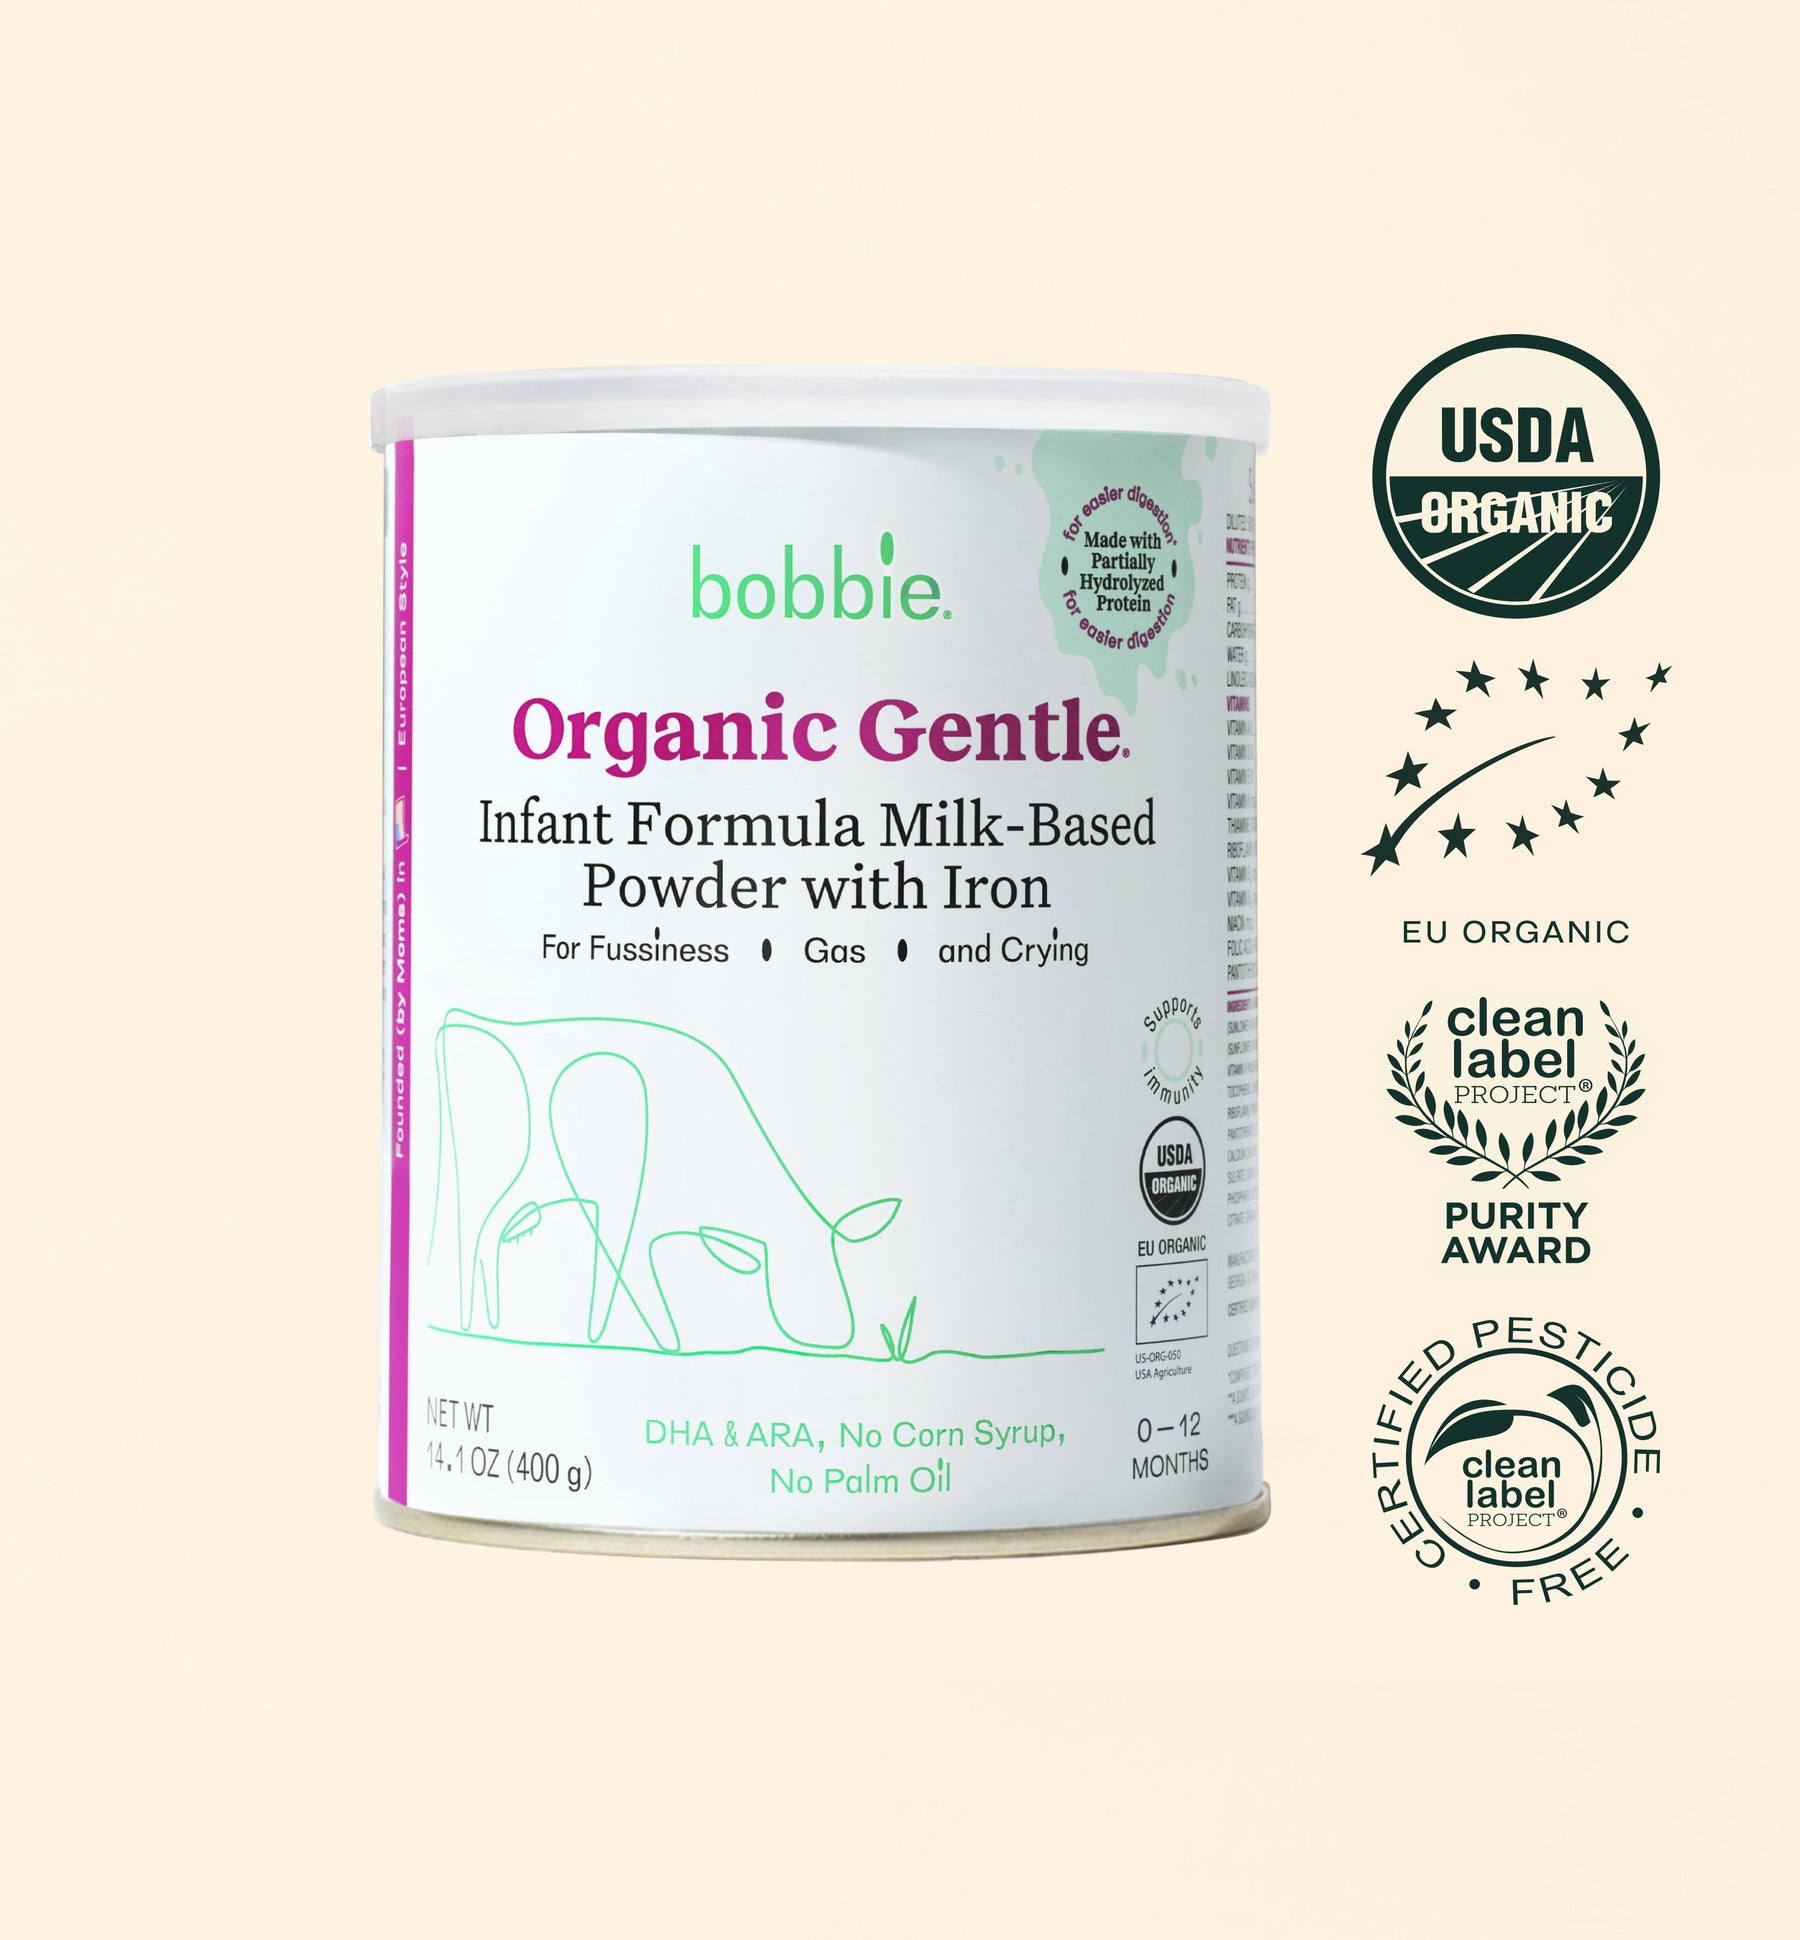 Bobbie Organic Gentle Infant Formula can